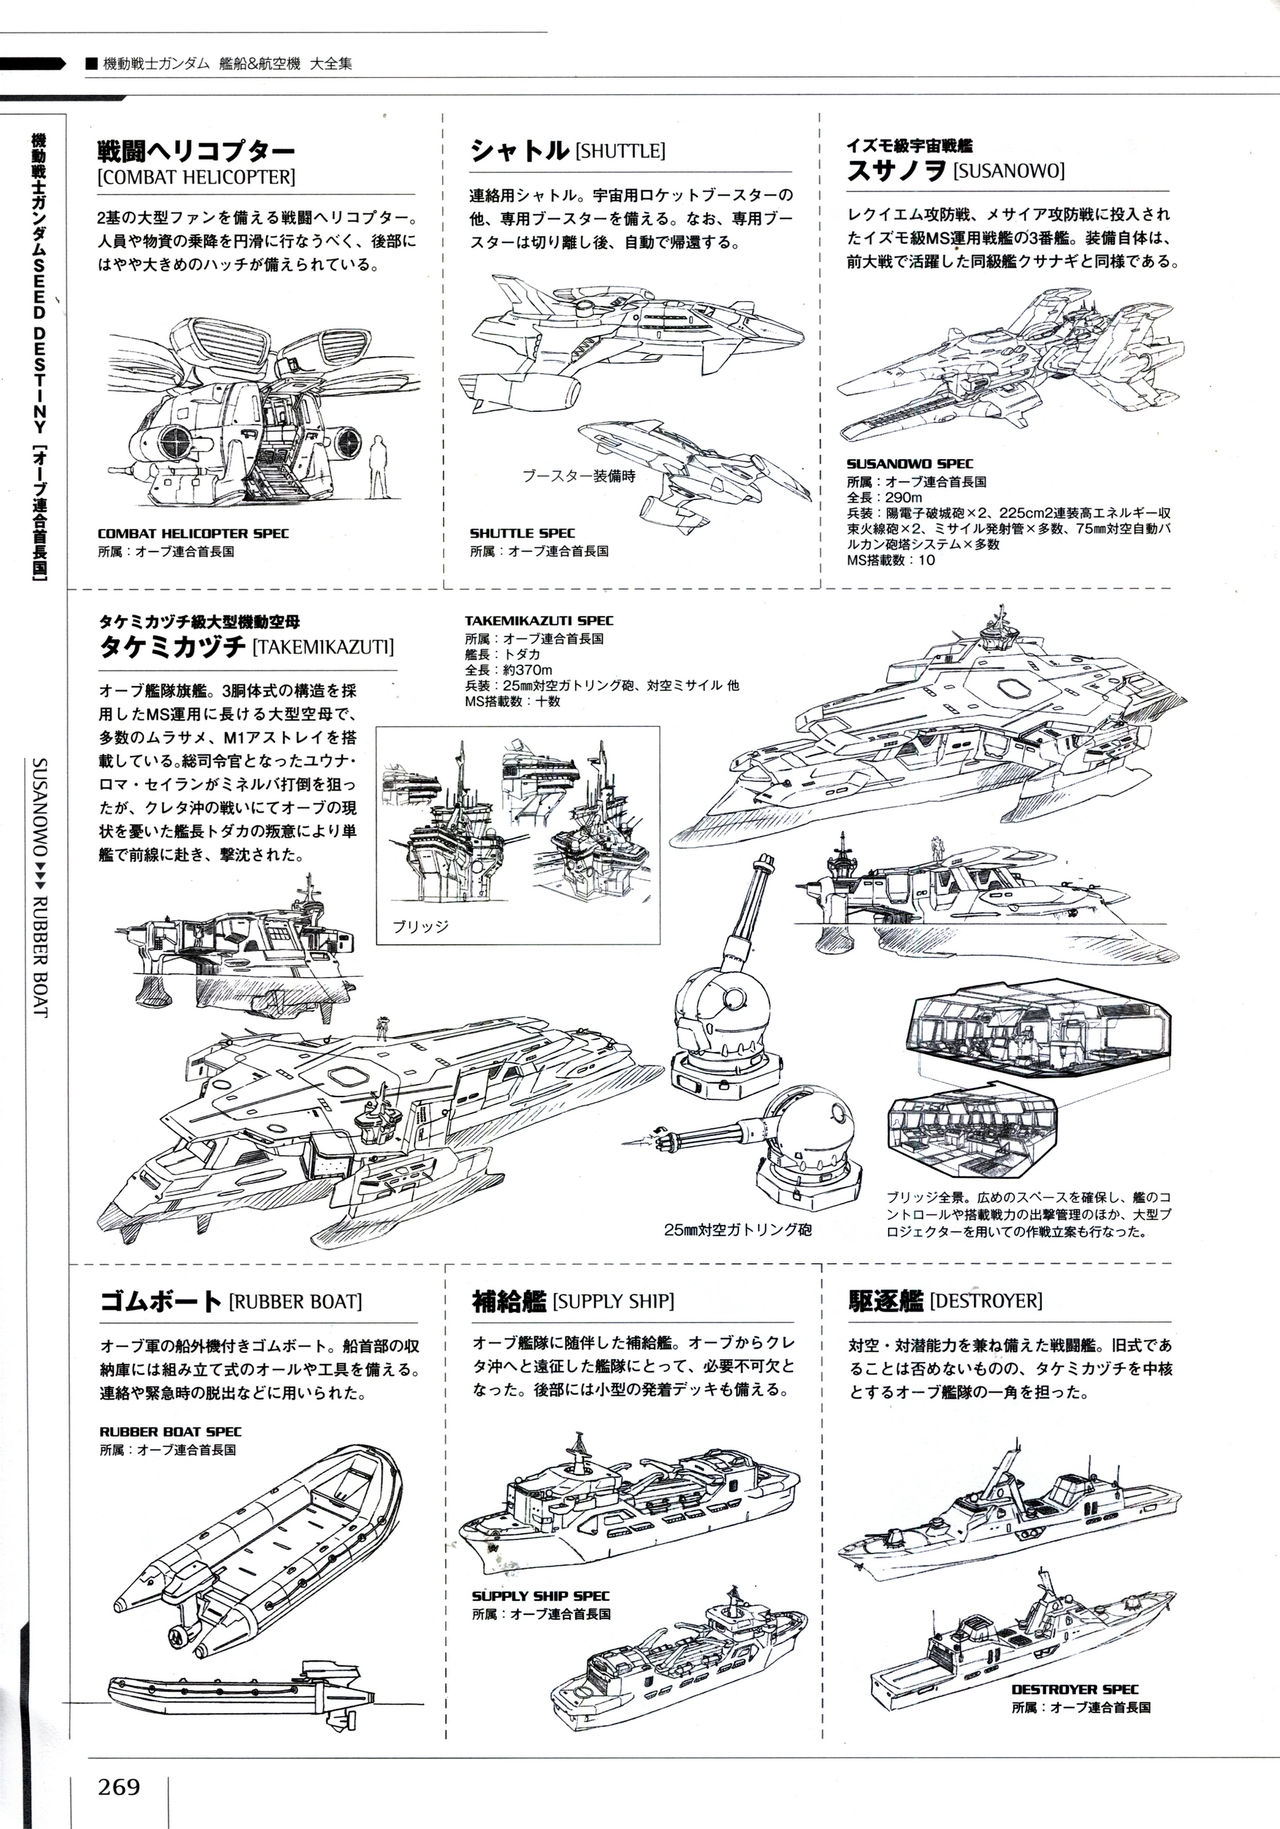 Mobile Suit Gundam - Ship & Aerospace Plane Encyclopedia - Revised Edition 274